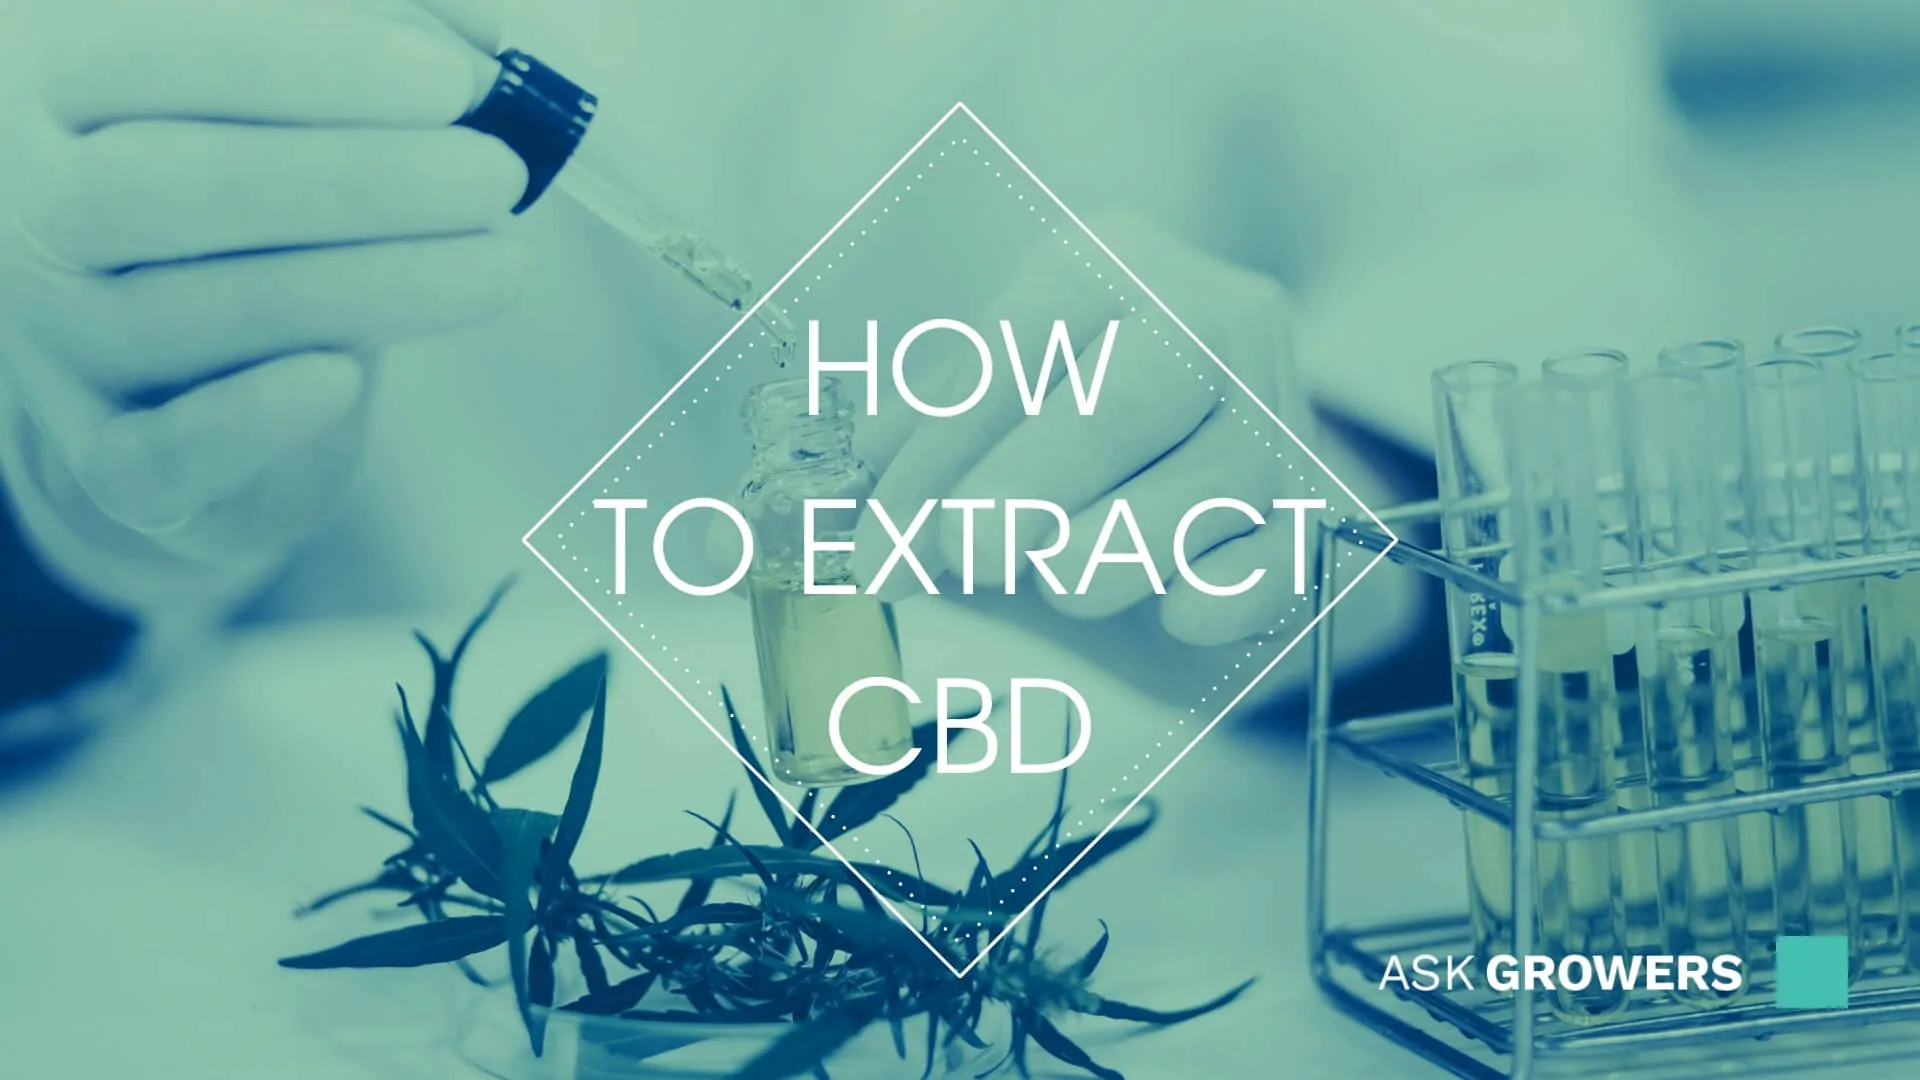 How to Extract CBD: CBD Extraction Methods Explained